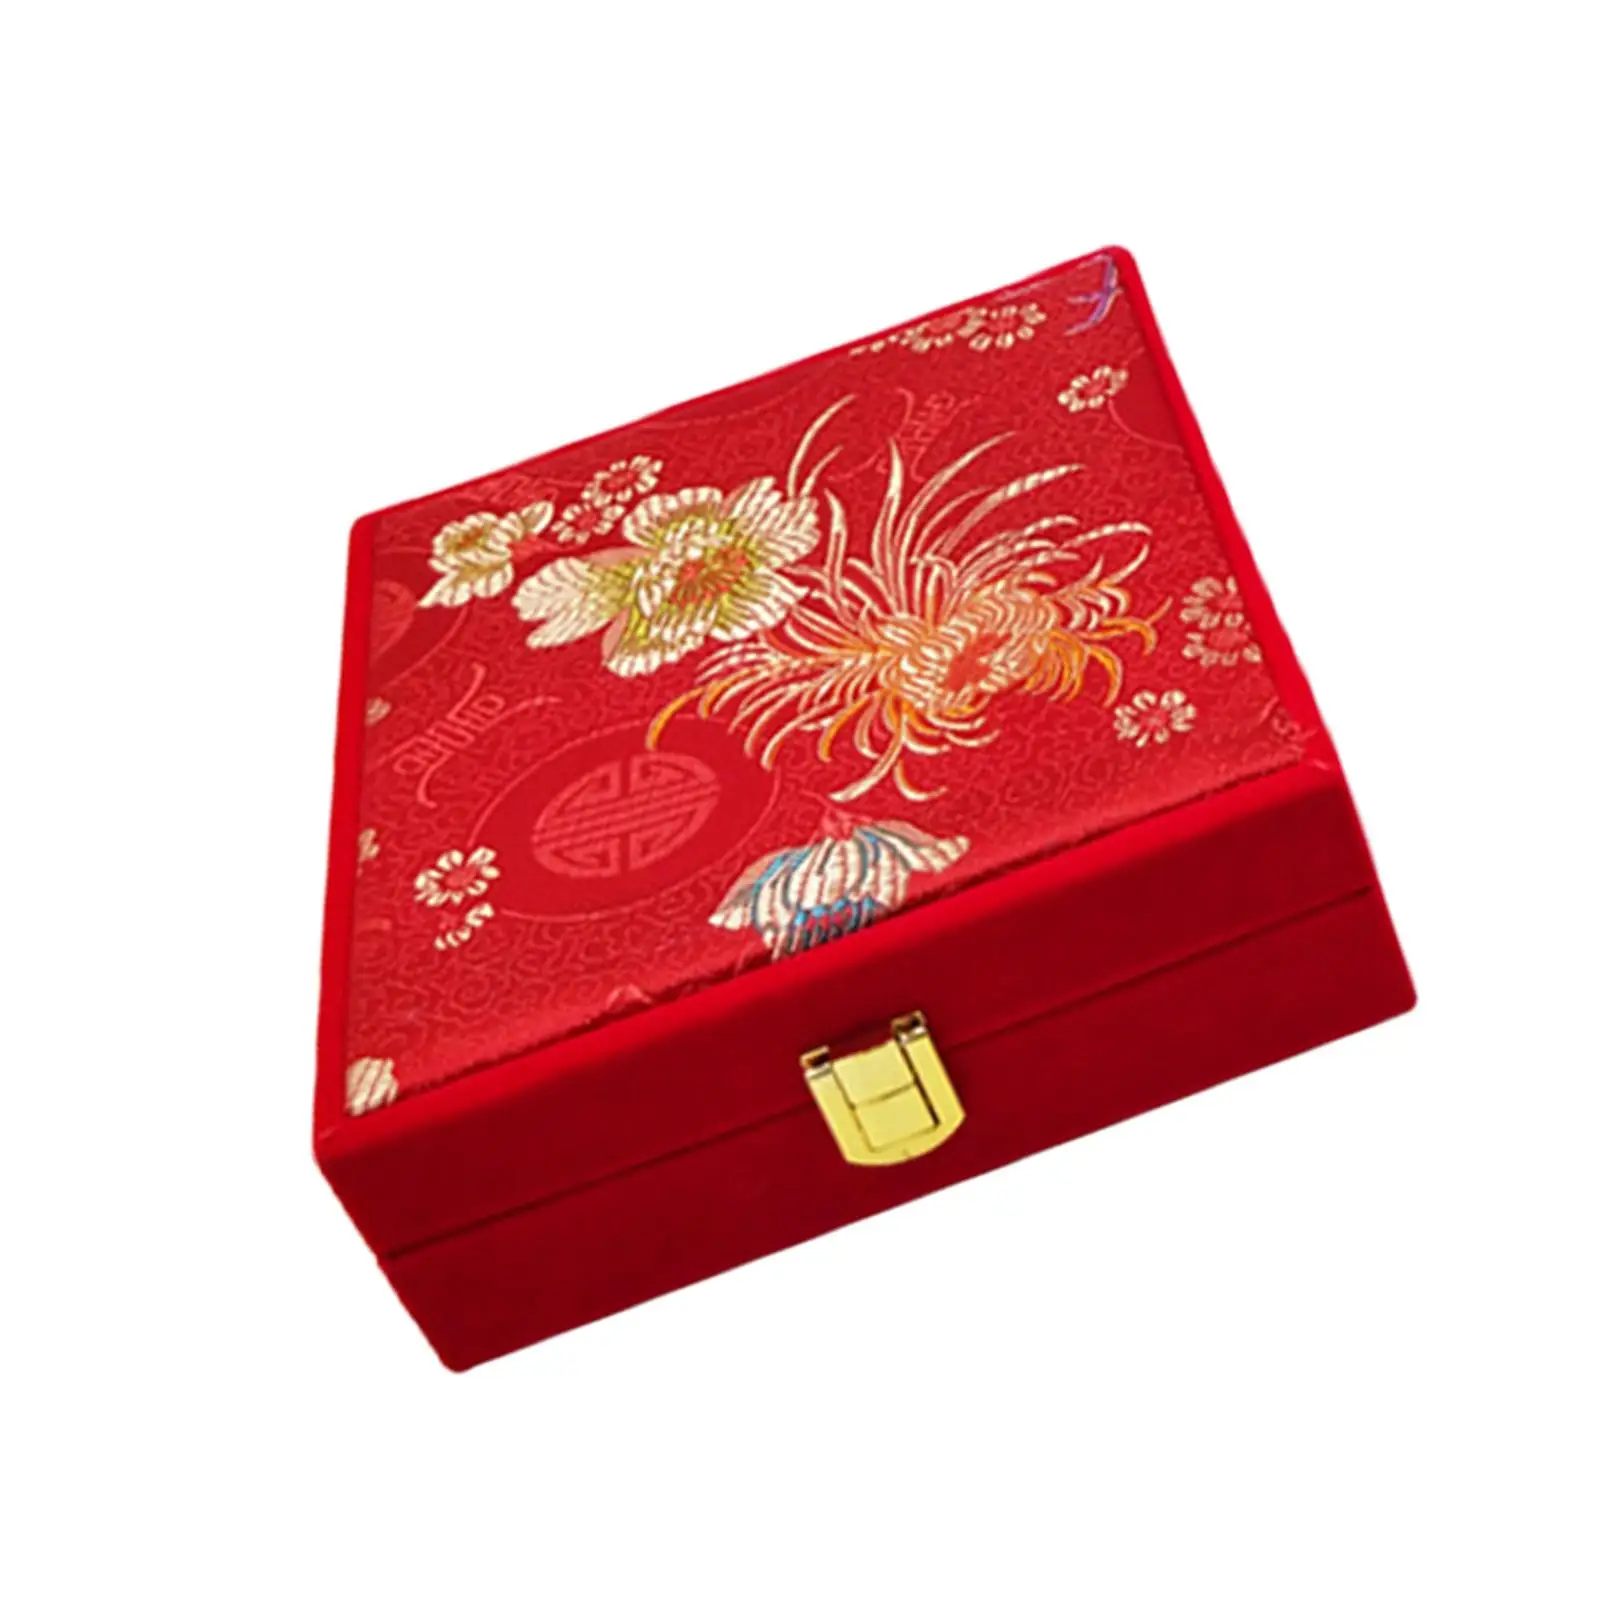 Multifunctional Jewelry Display Box Earrings Bracelet Rings Chinese Style Red Velvet Storage Case Gift Box Organizer for Wedding